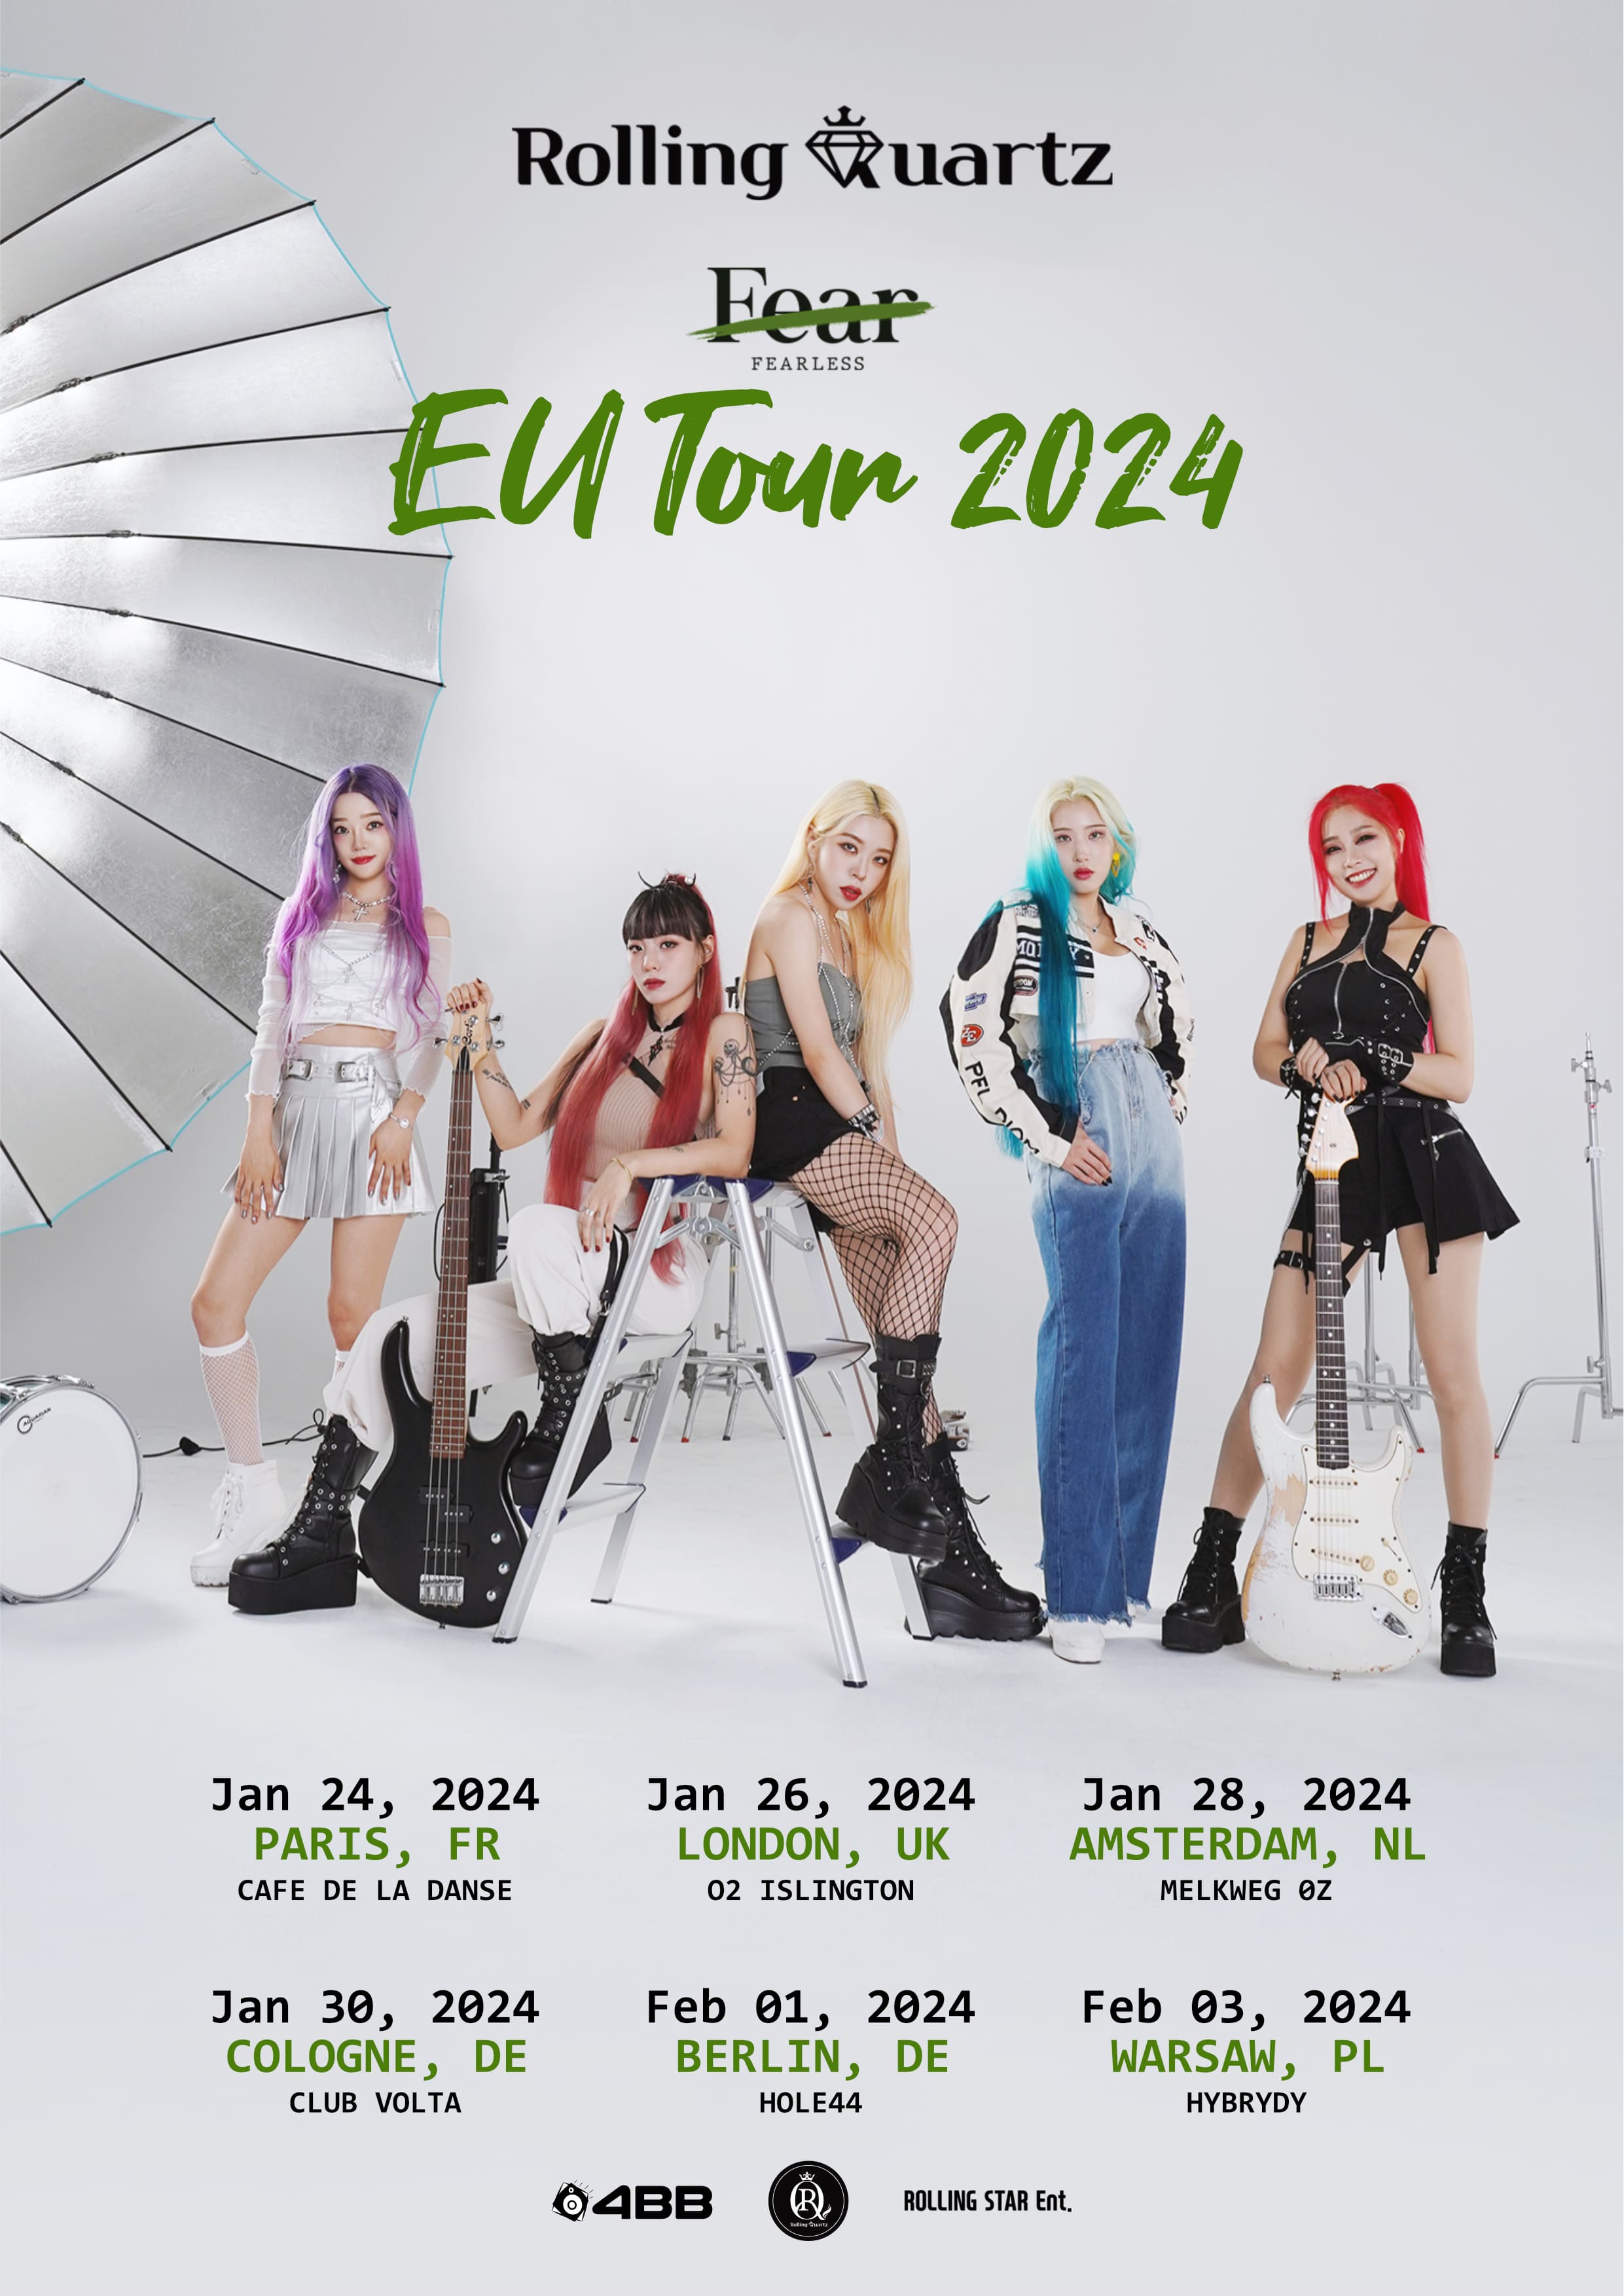 ROLLING QUARTZ - ‘FEARLESS’ EU TOUR 2024 Poster